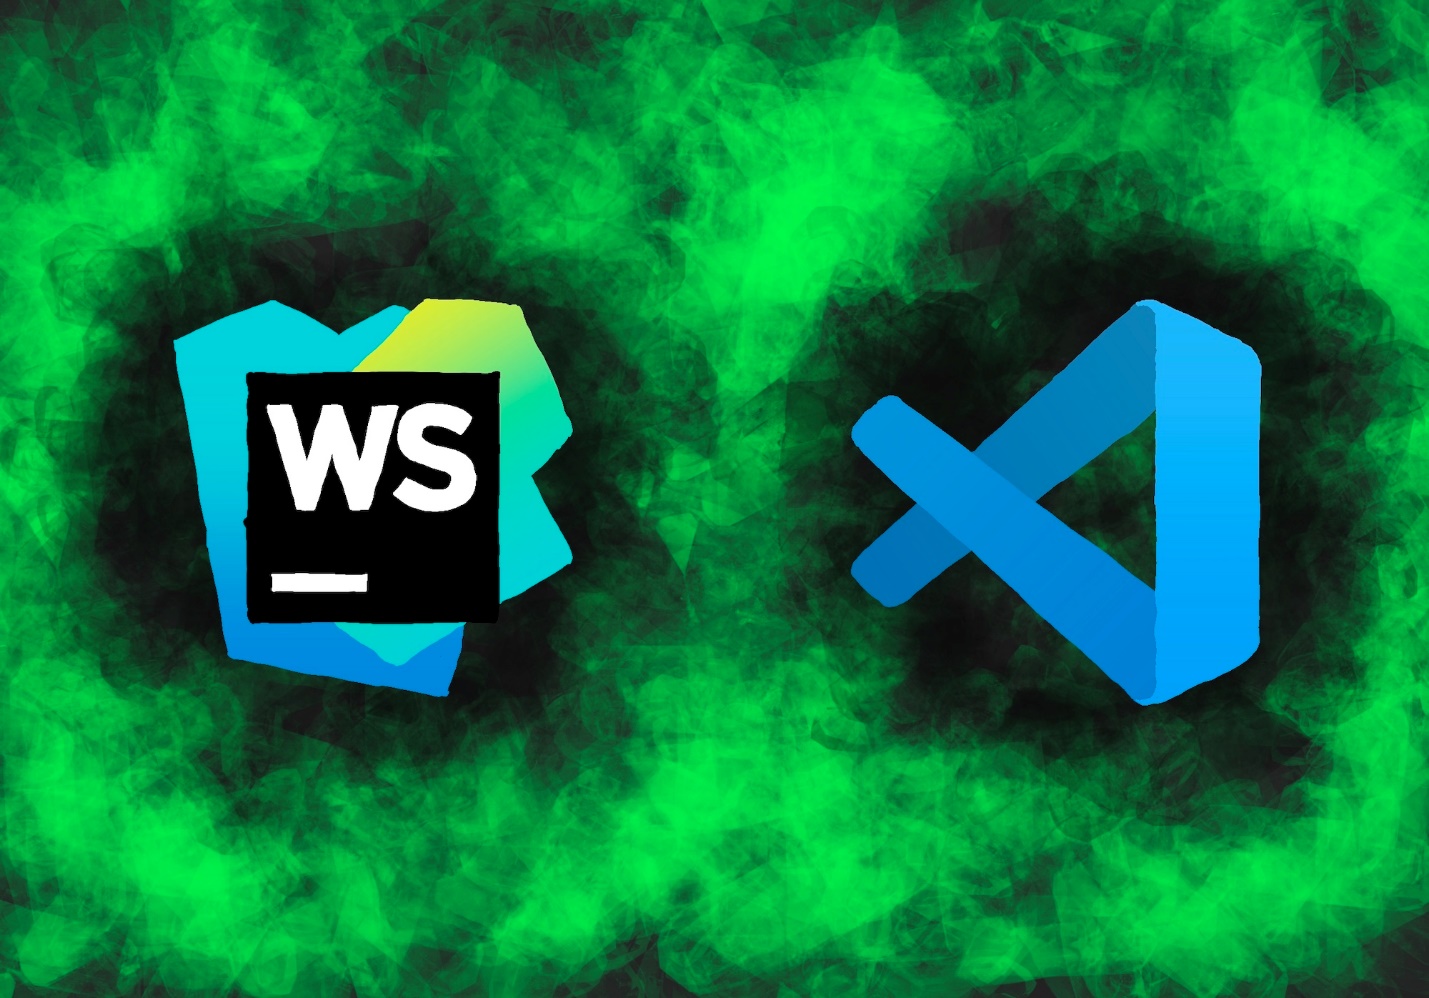 VSCode و WebStorm محبوب‌ترین ابزار های ویرایشگر متن برای توسعه فرانت اند